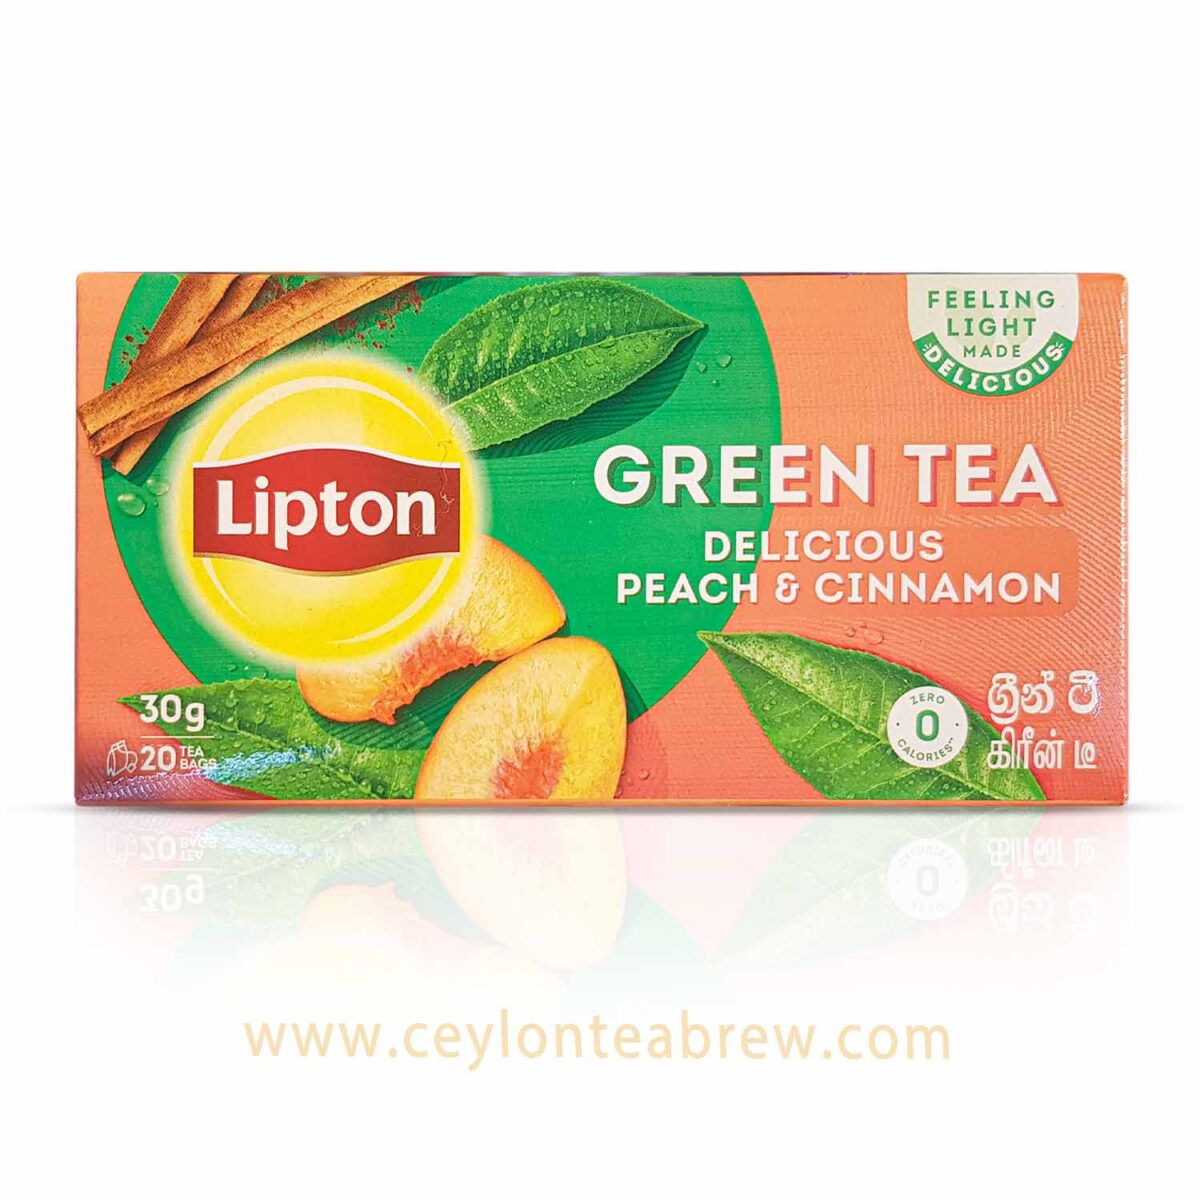 Lipton Ceylon green tea delicious peach and cinnamon tea bags